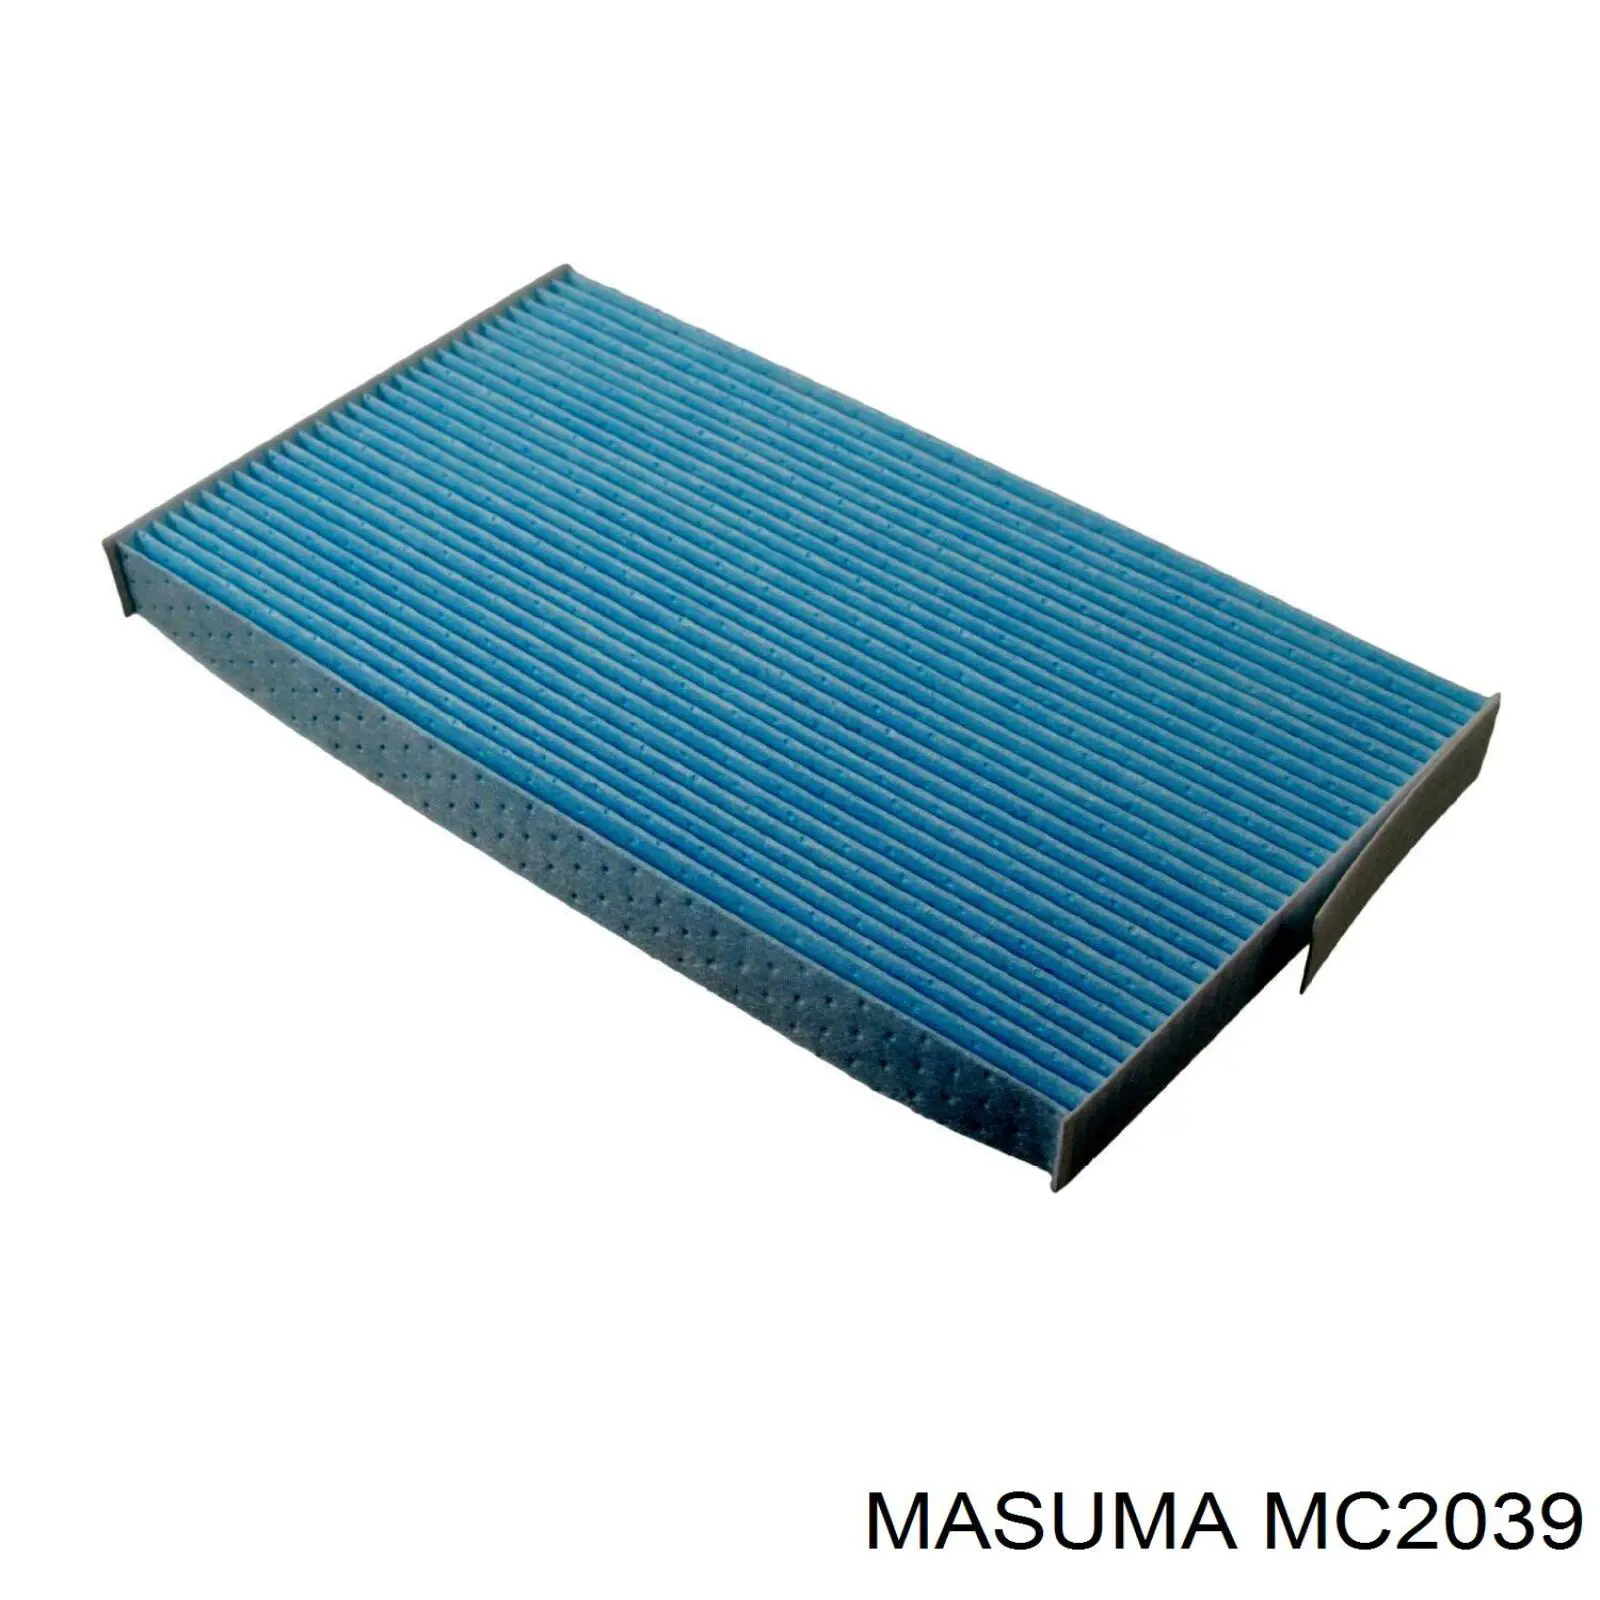 MC2039 Masuma filtro habitáculo